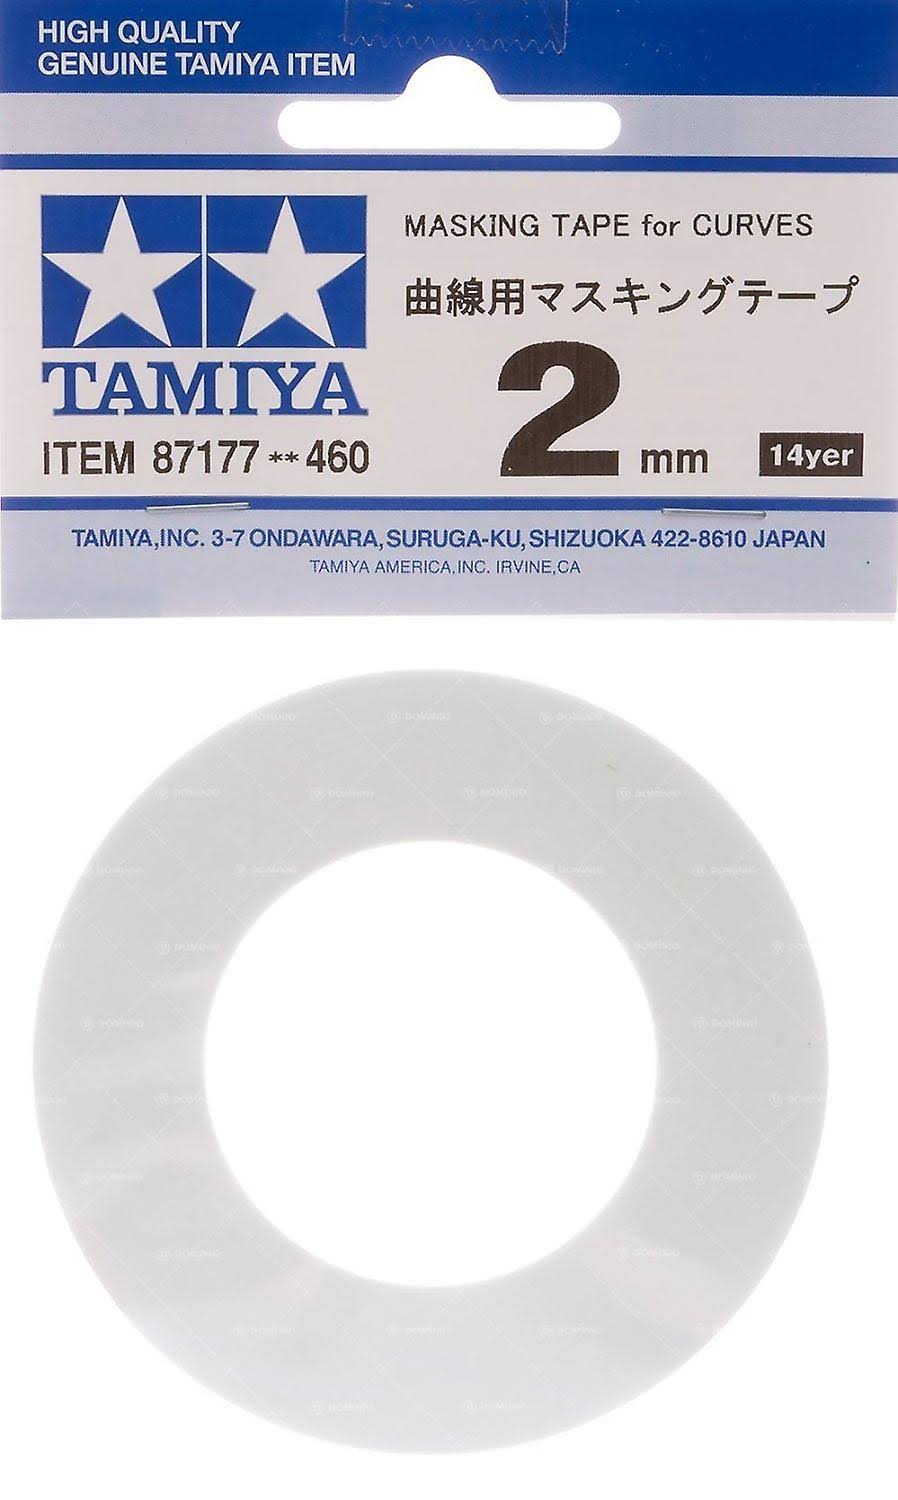 Tamiya 87177 Masking Tape for Curves 2 mm